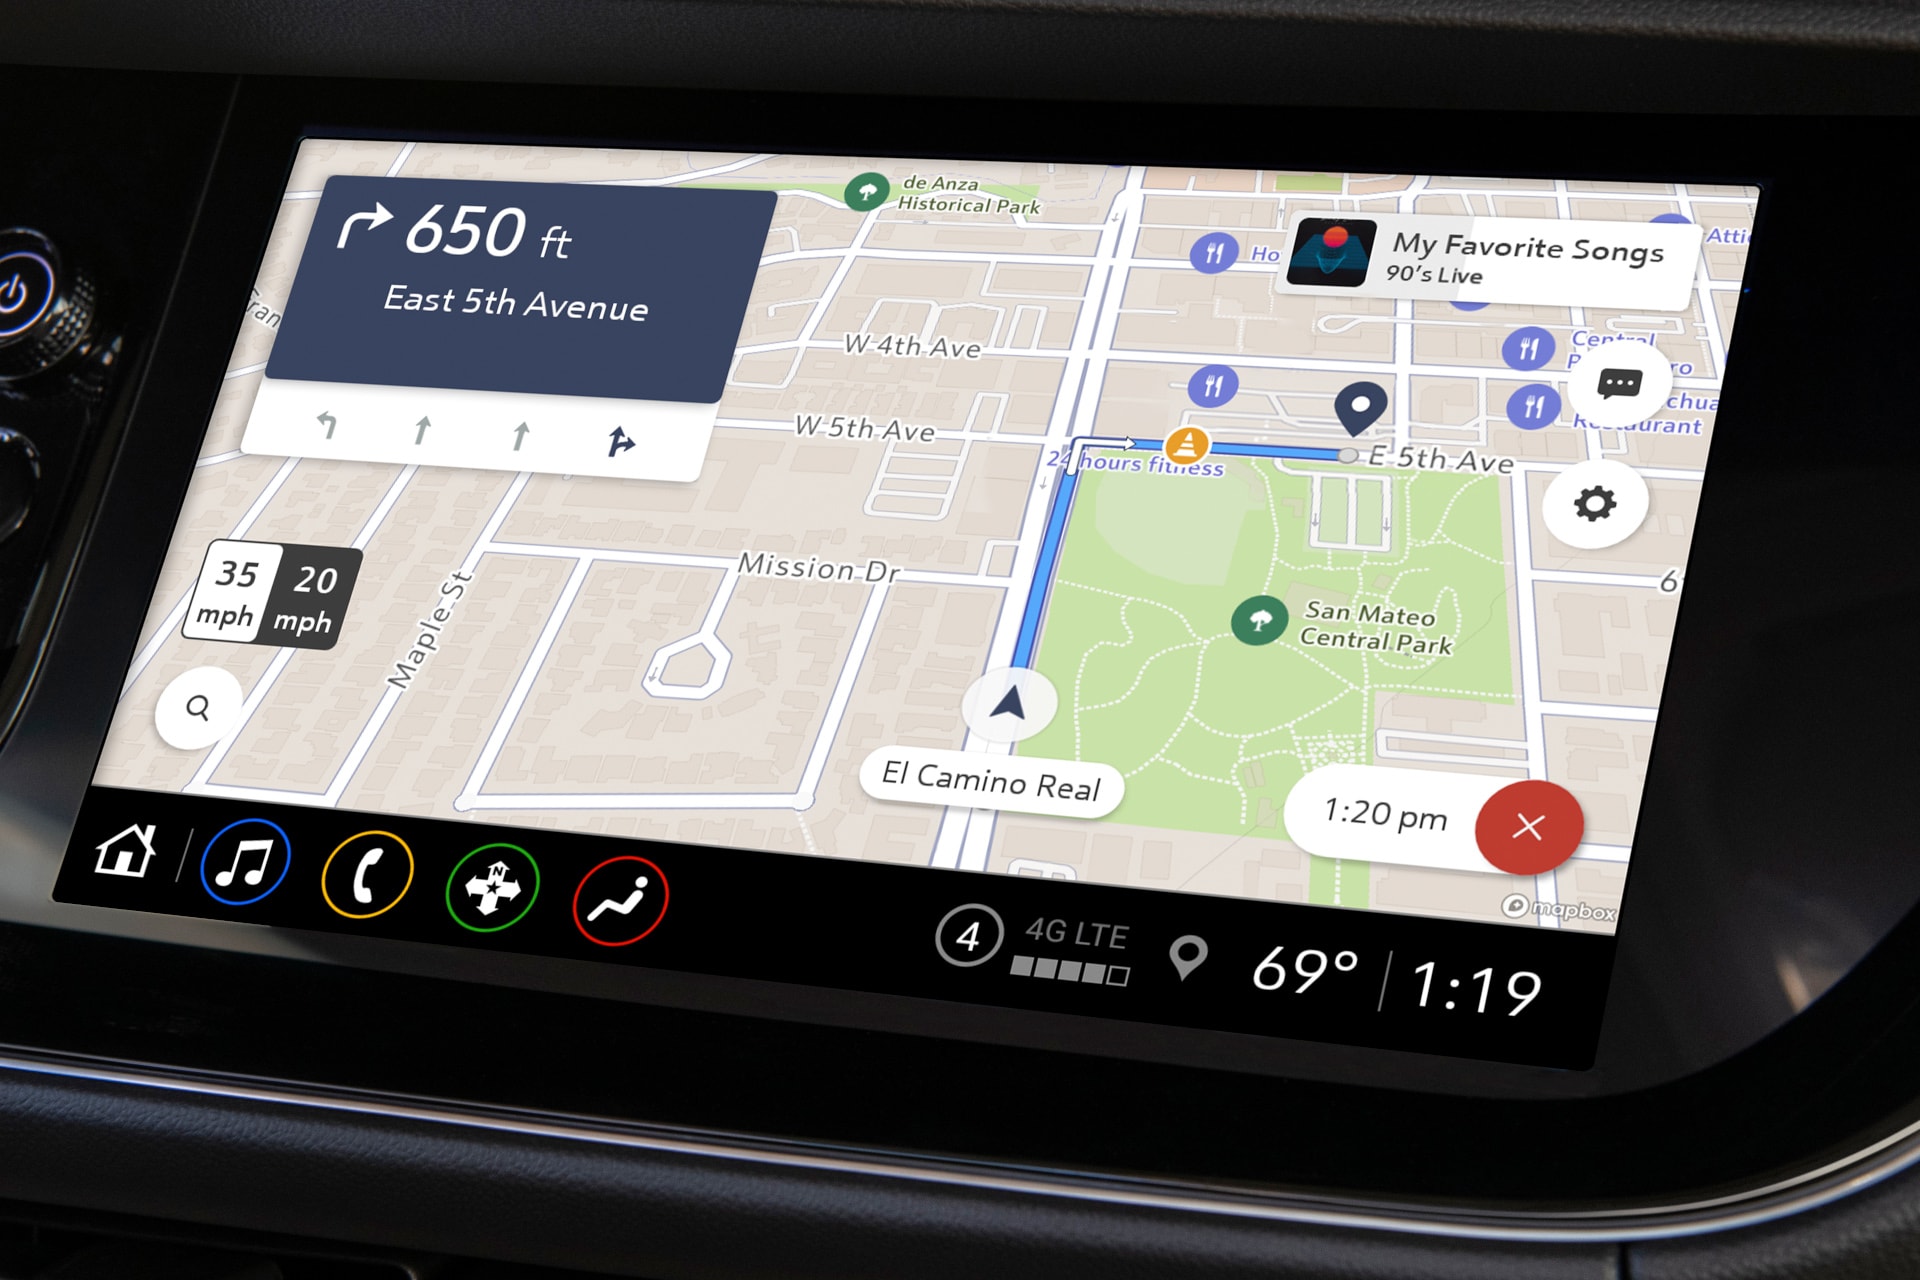 GM Announces Killer Google Maps Alternative With Traffic Alerts, Voice